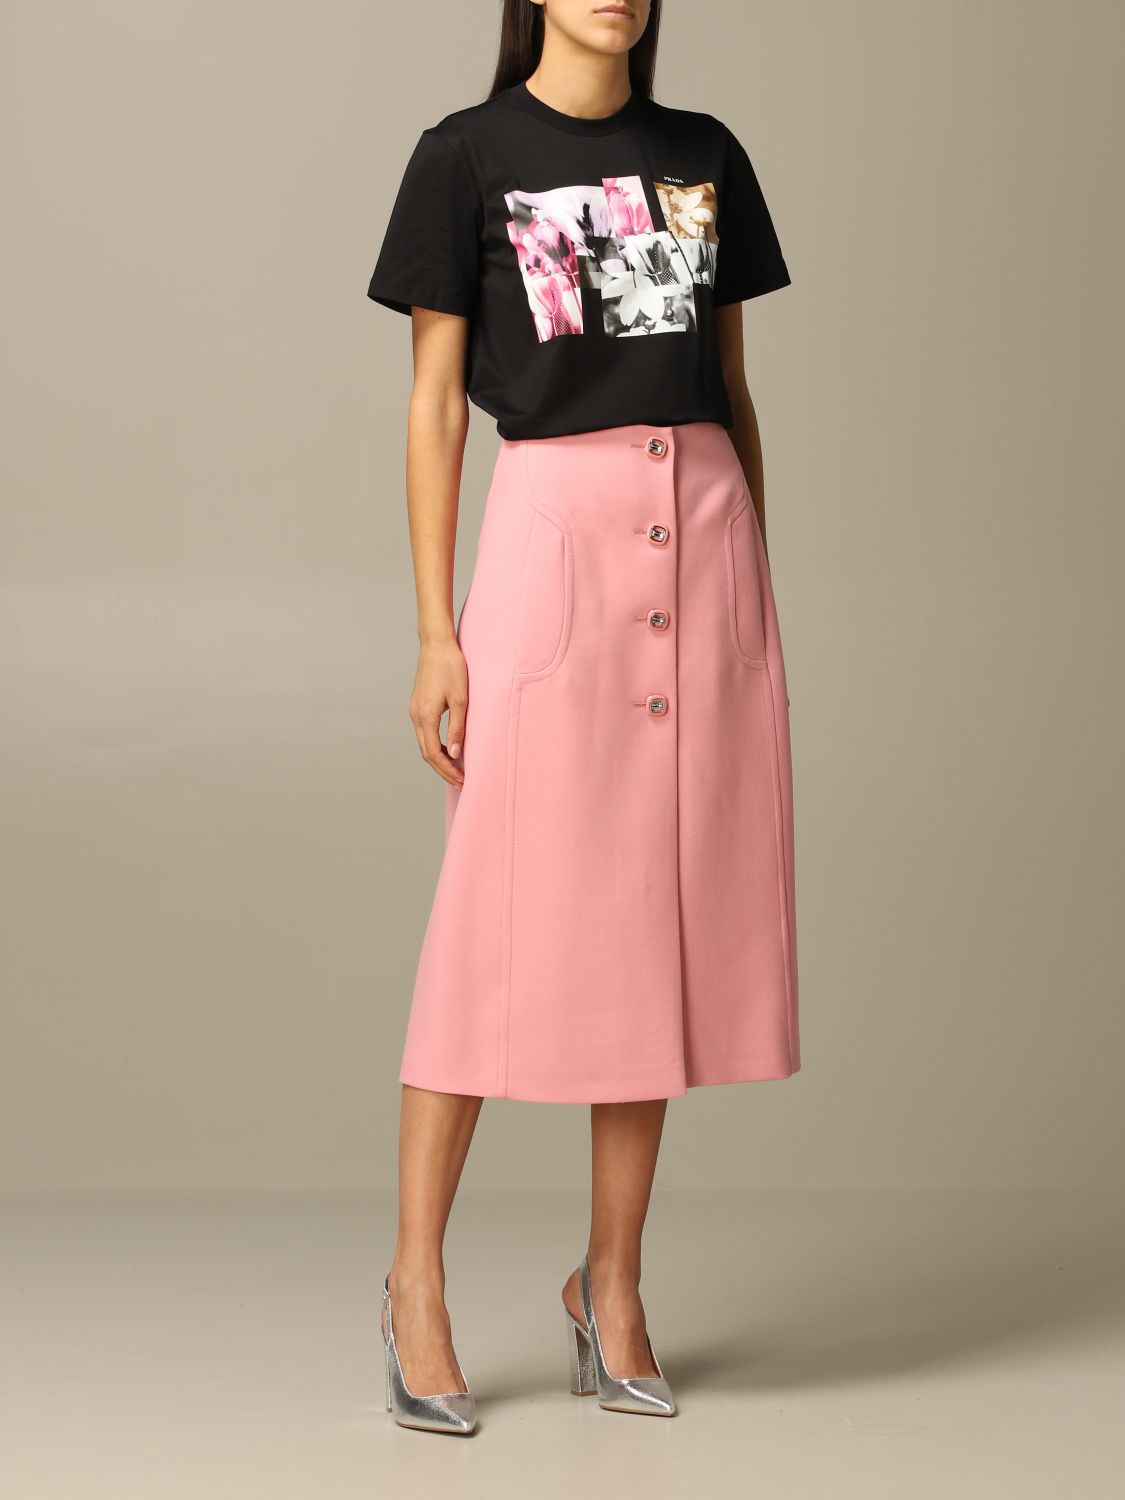 PRADA: virgin wool skirt with jewel buttons - Pink | Prada skirt P156R 1XA5  online on 